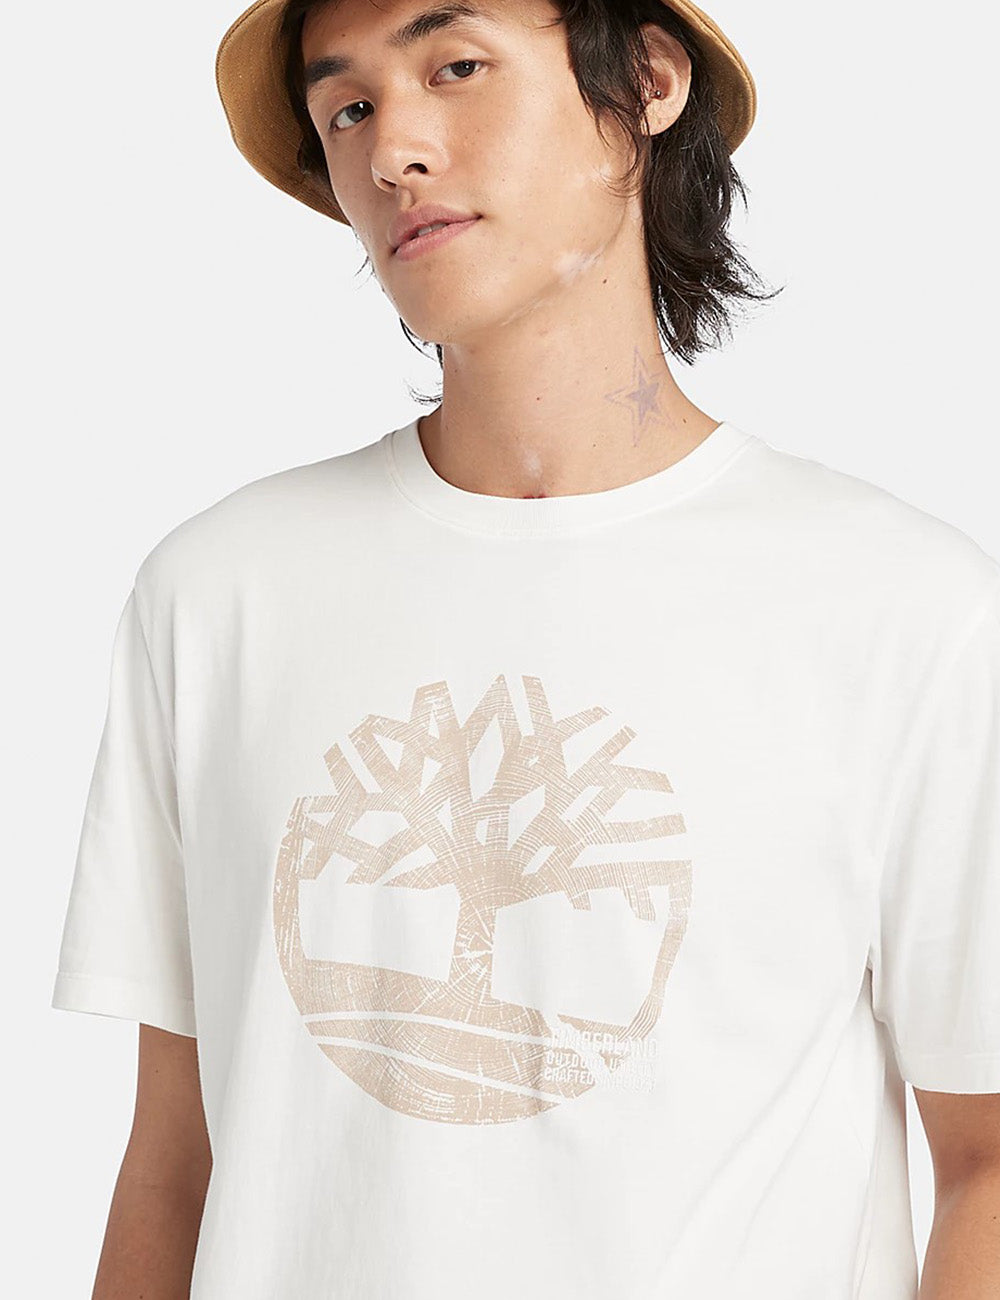 Timberland Merrymack River Logo T-Shirt - Undyed